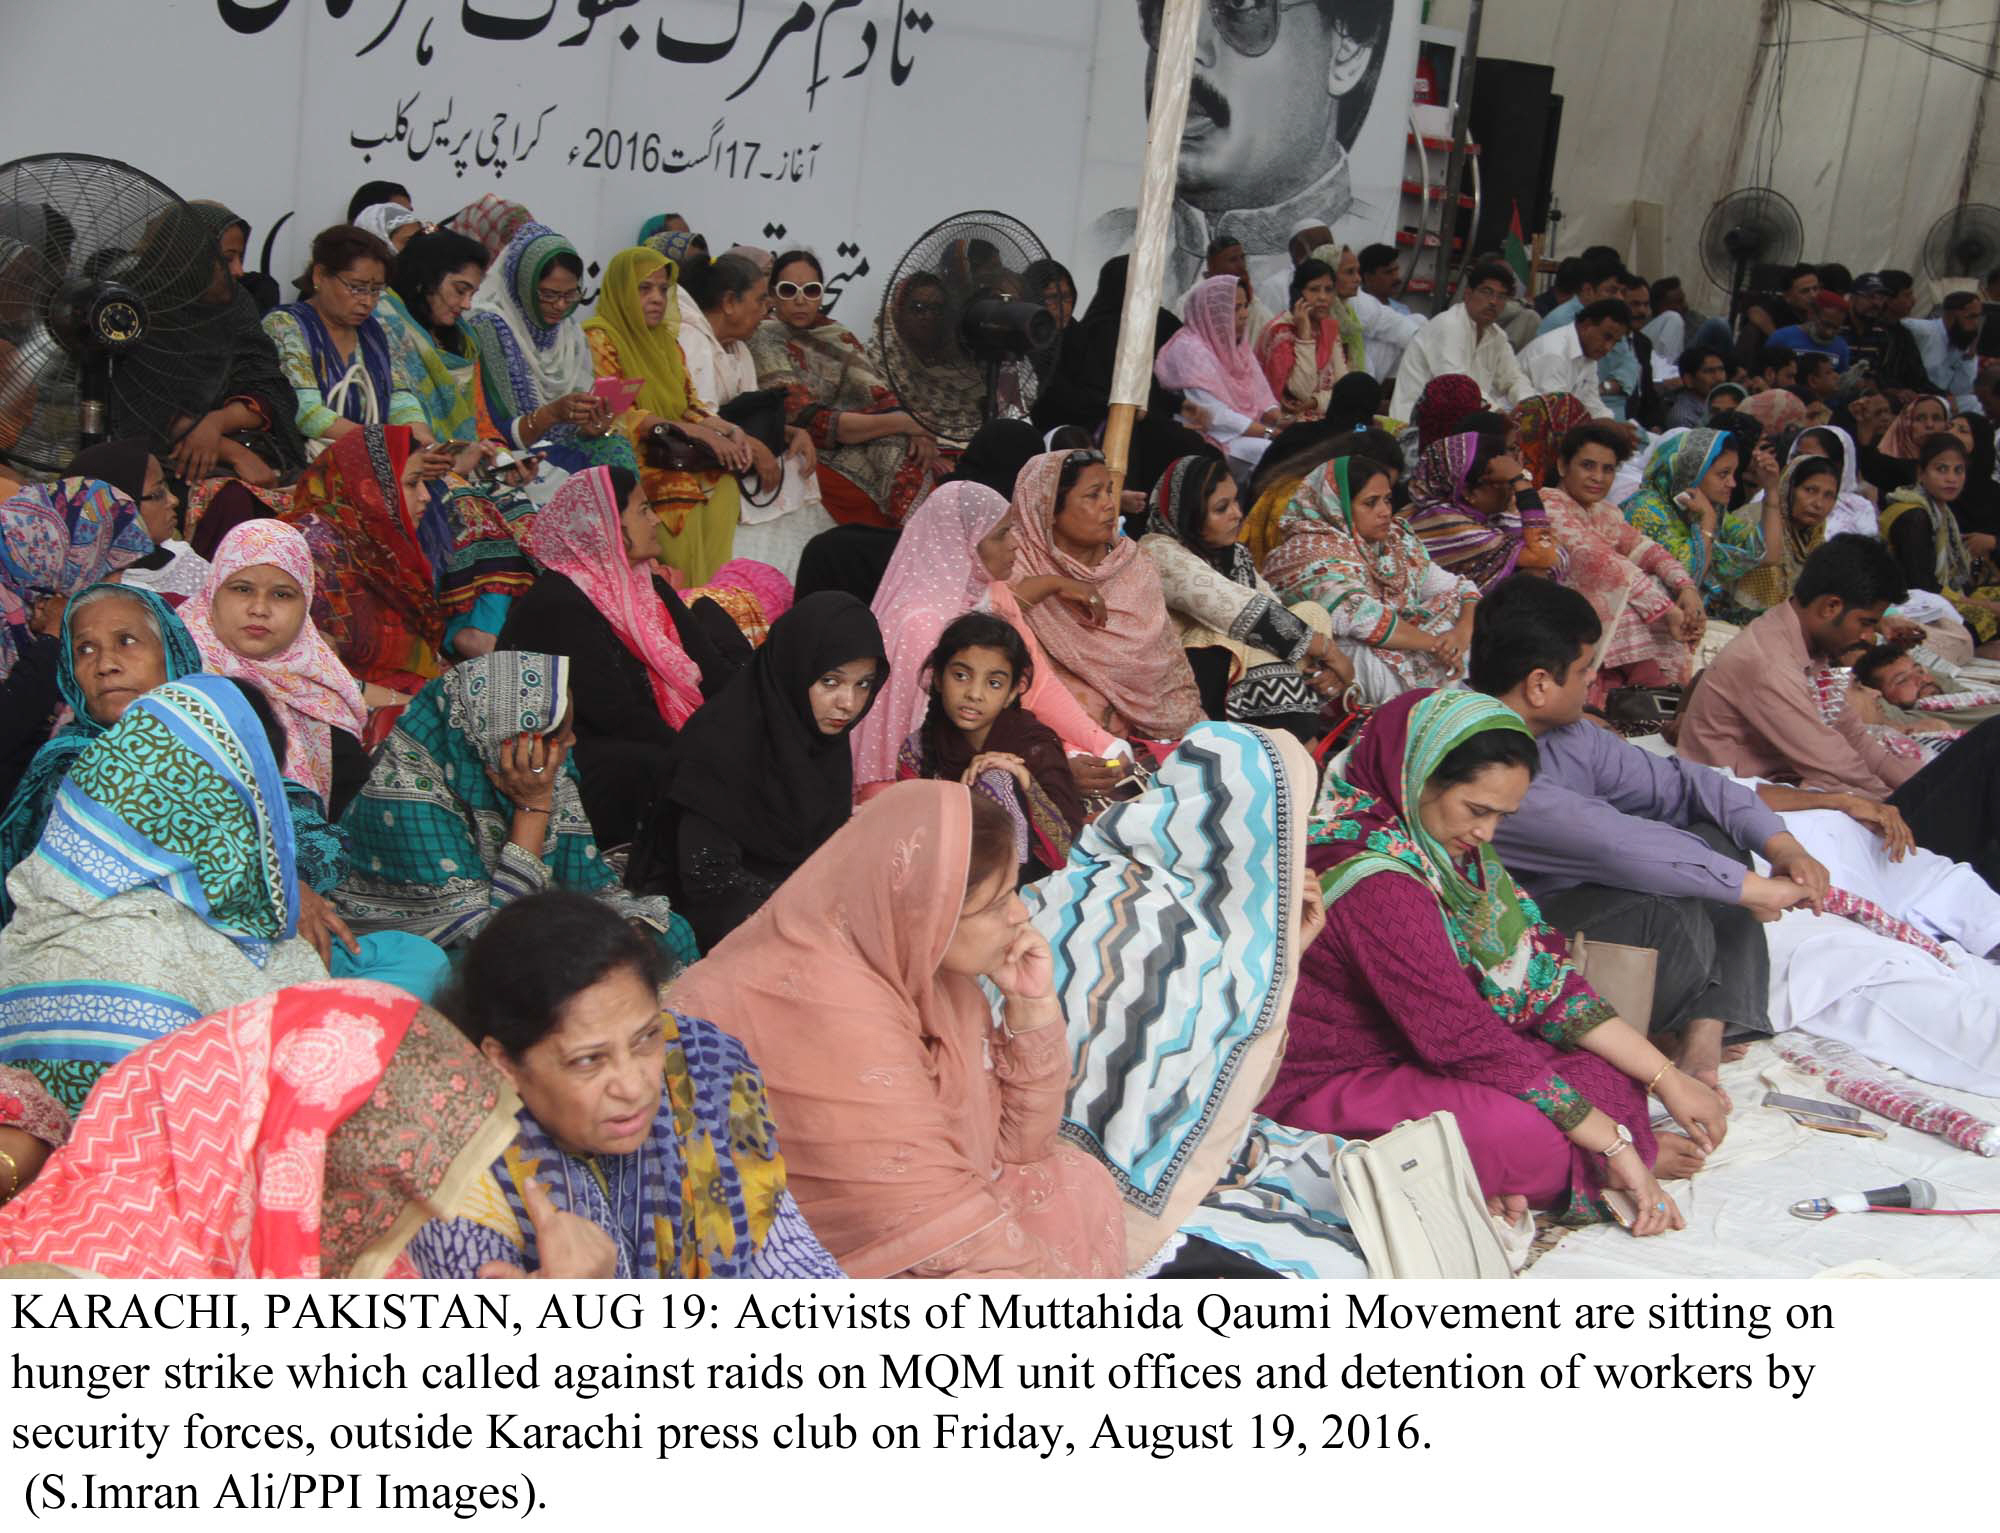 mqm activists are sitting on hunger strike outside karachi press club photo ppi